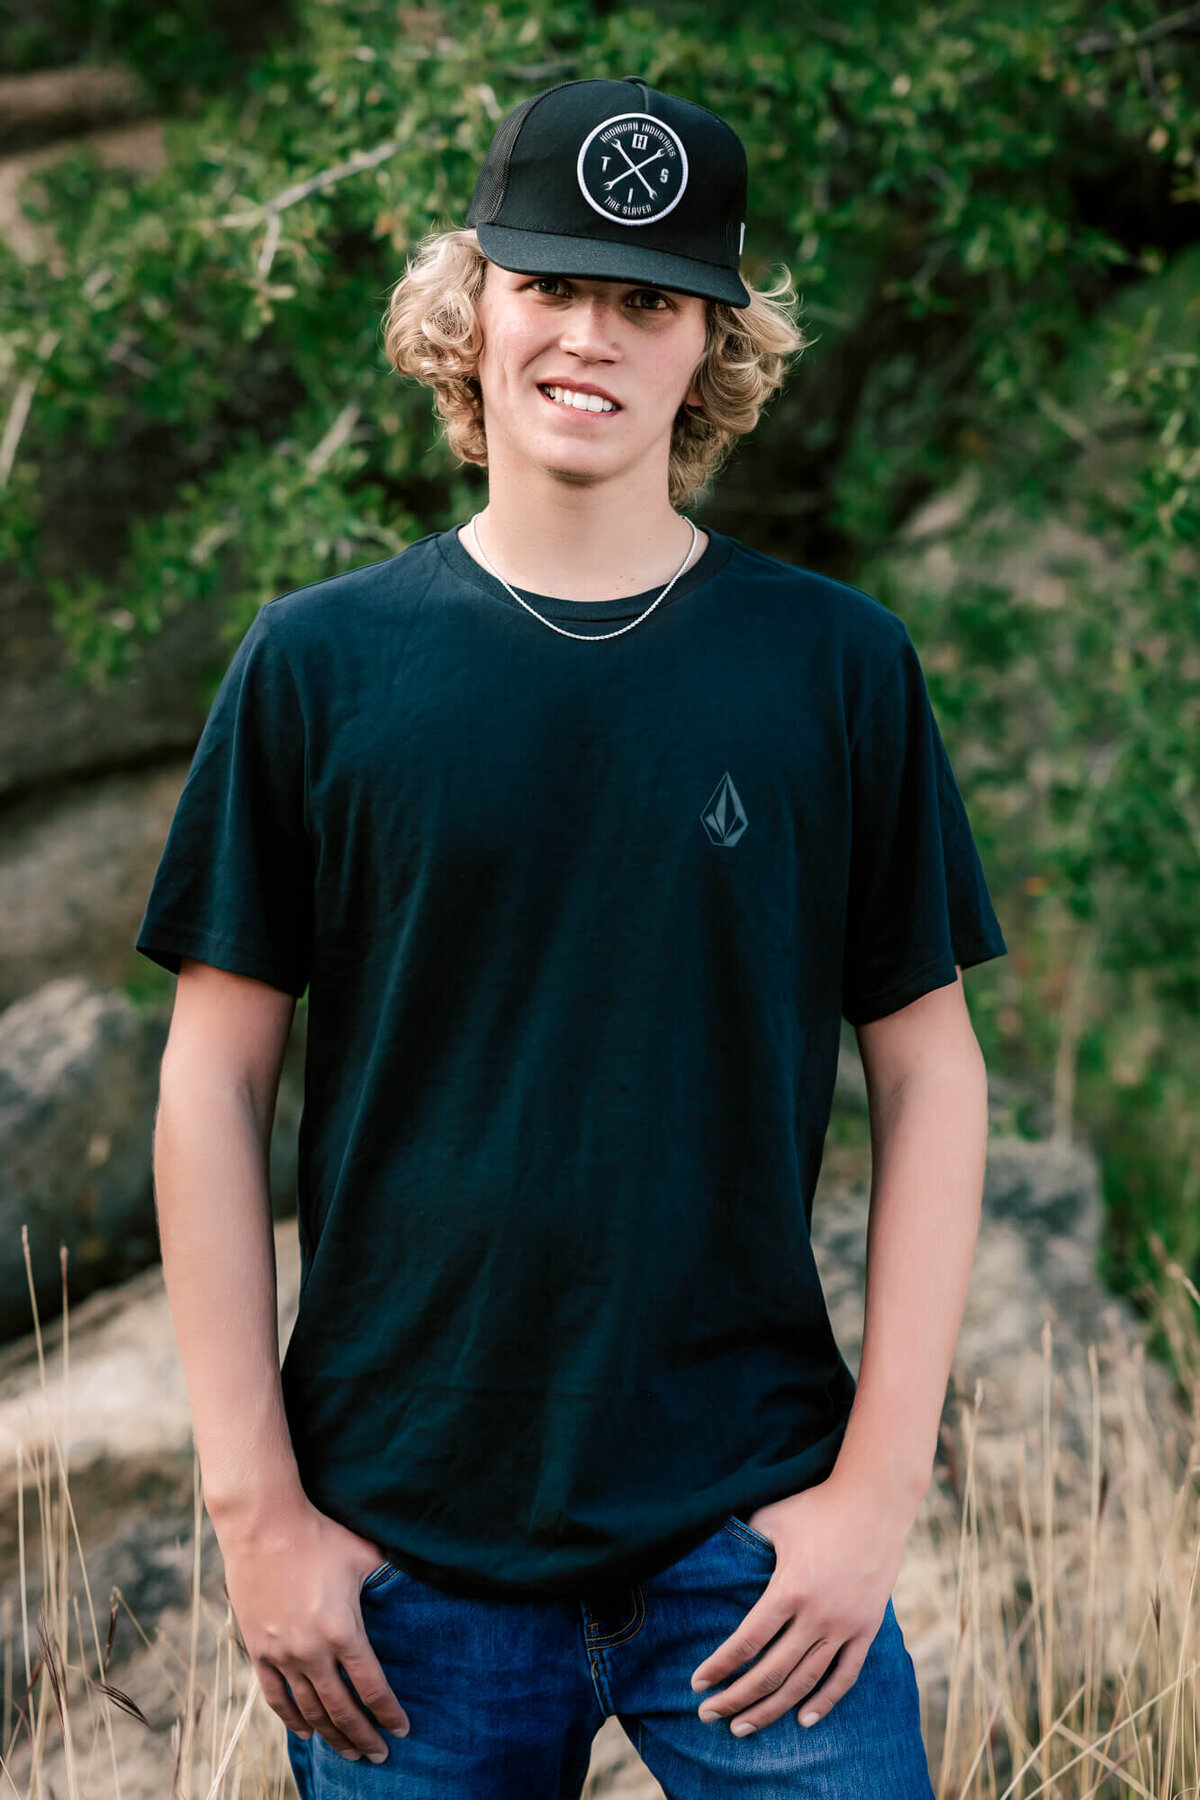 Boy poses in Granite Dells for Prescott senior photos